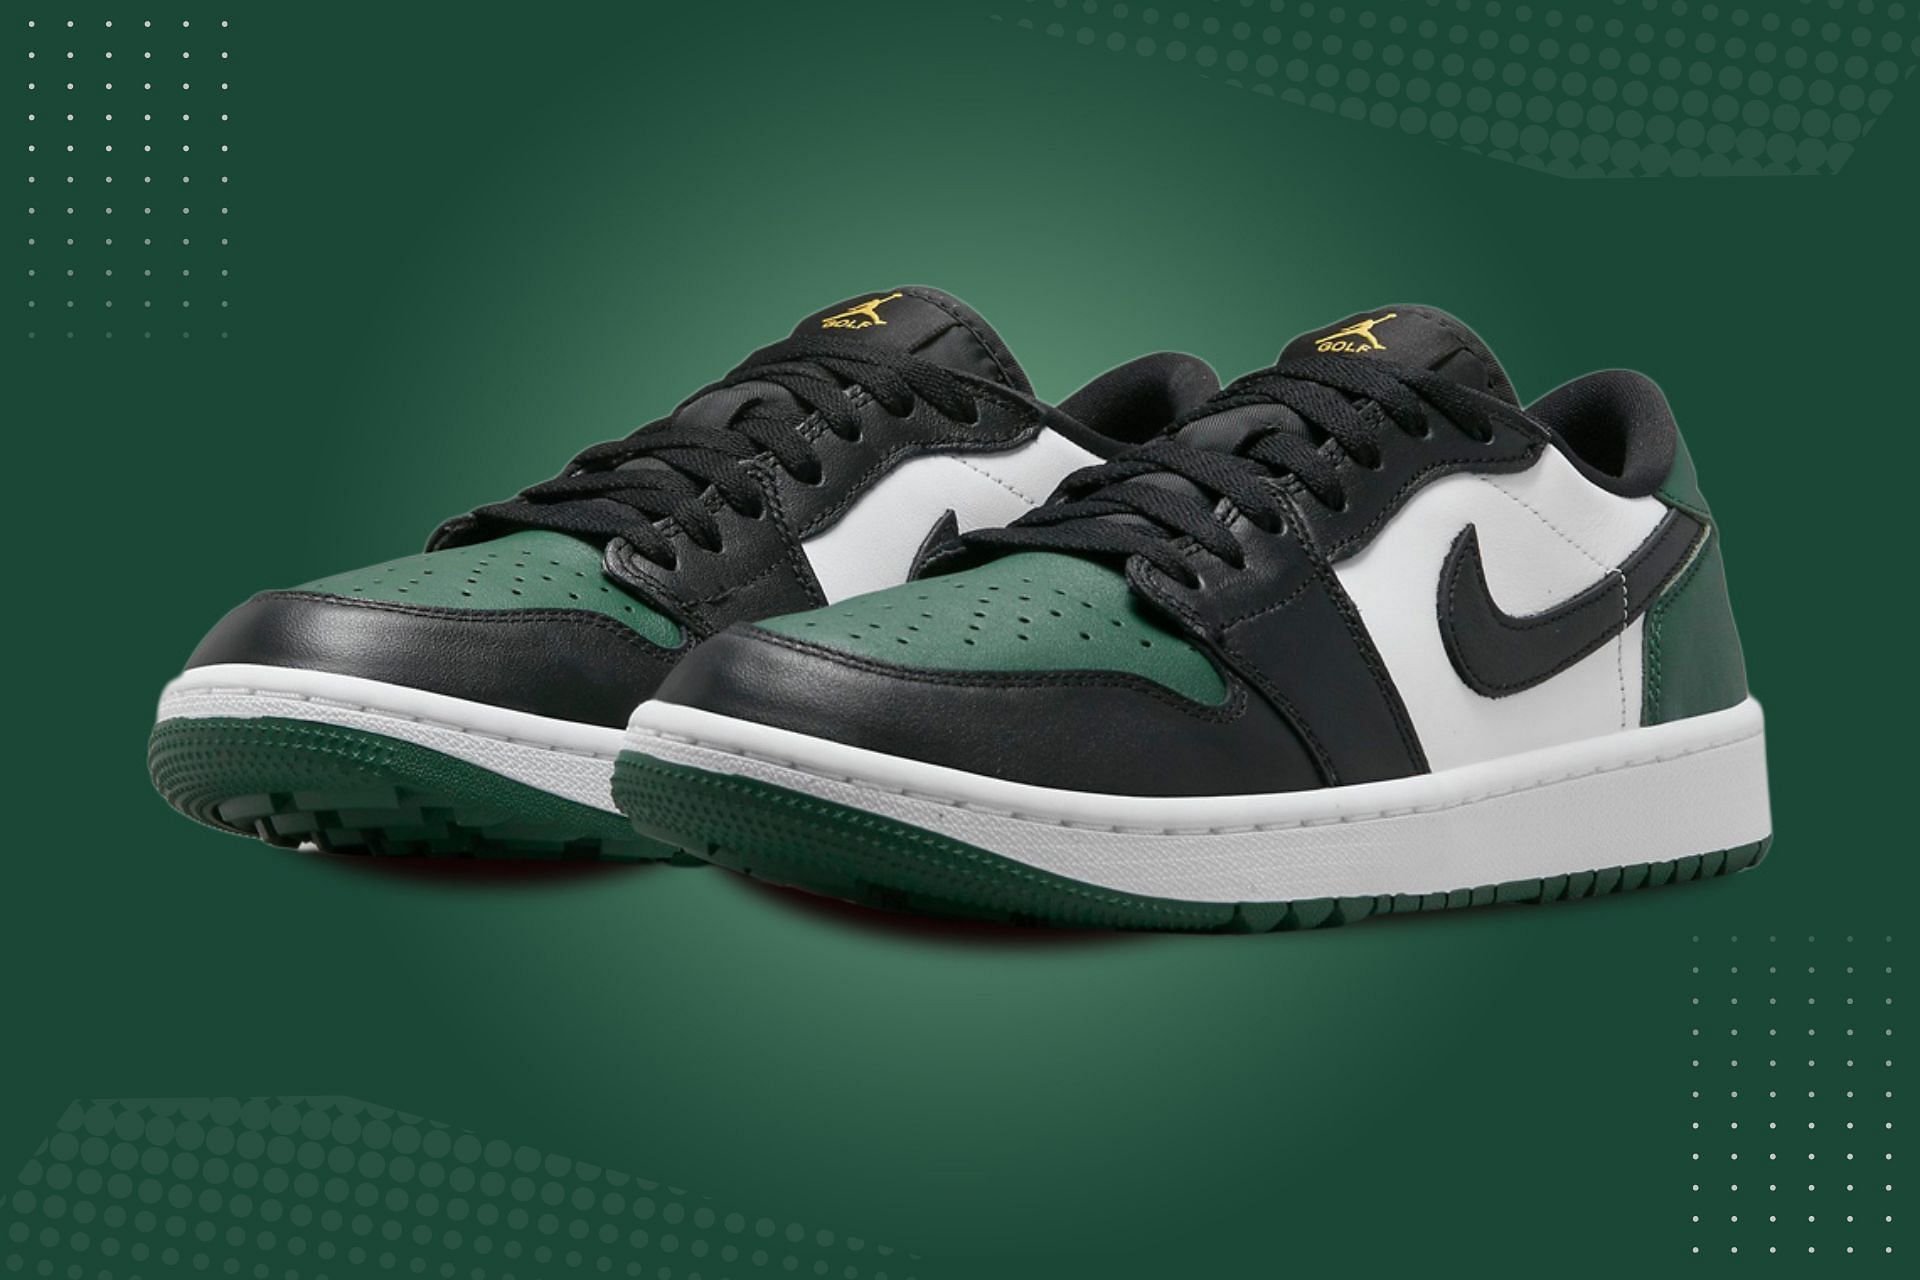 Nike Air Jordan 1 Low Noble Green shoes (Image via Nike)